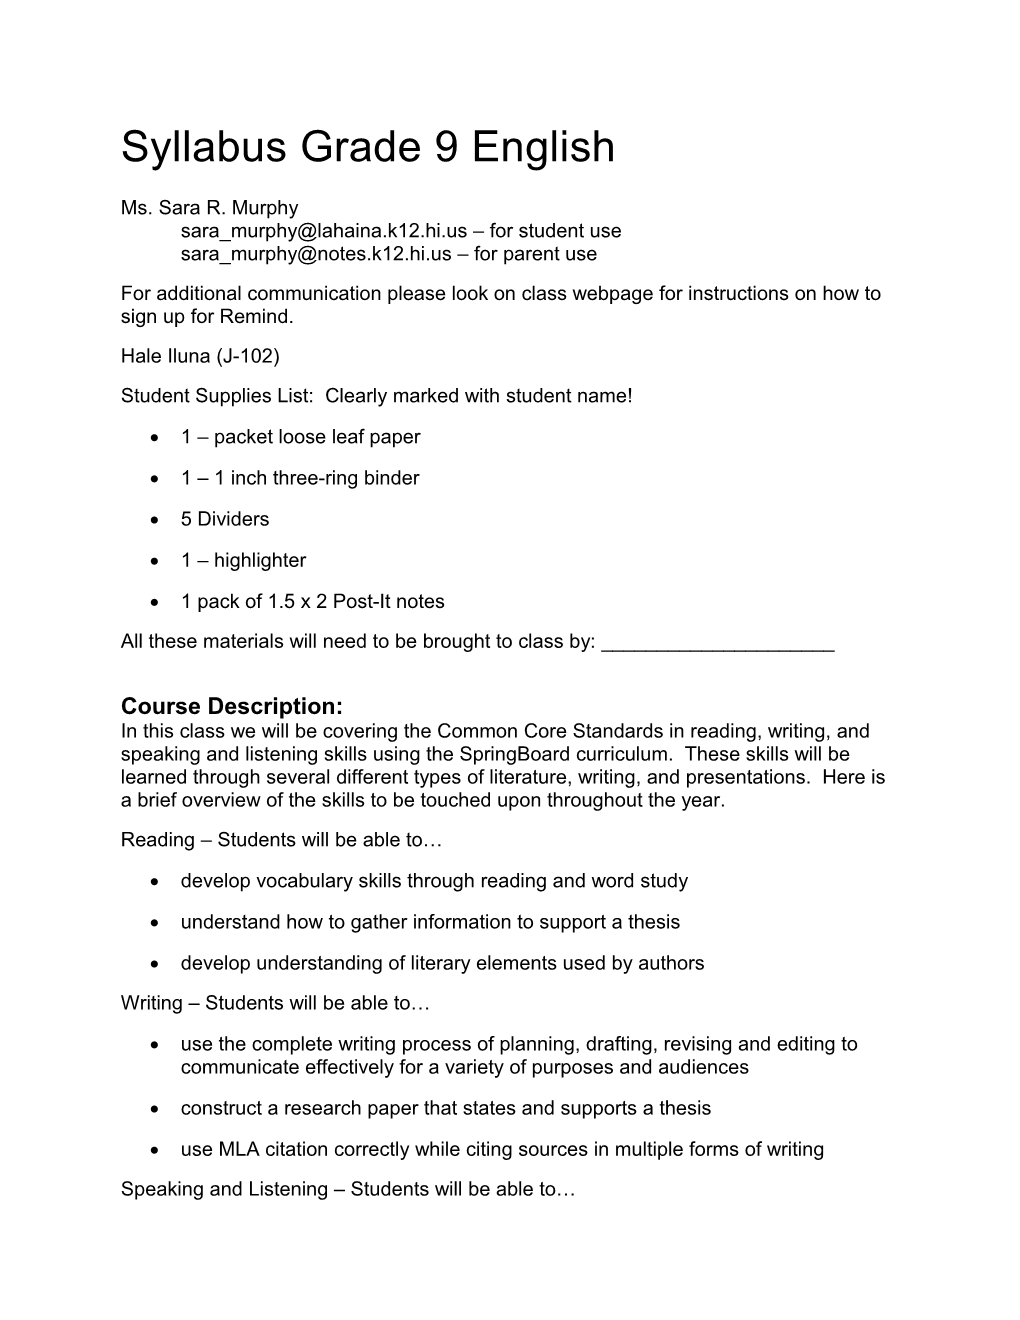 Syllabus Grade 9 English